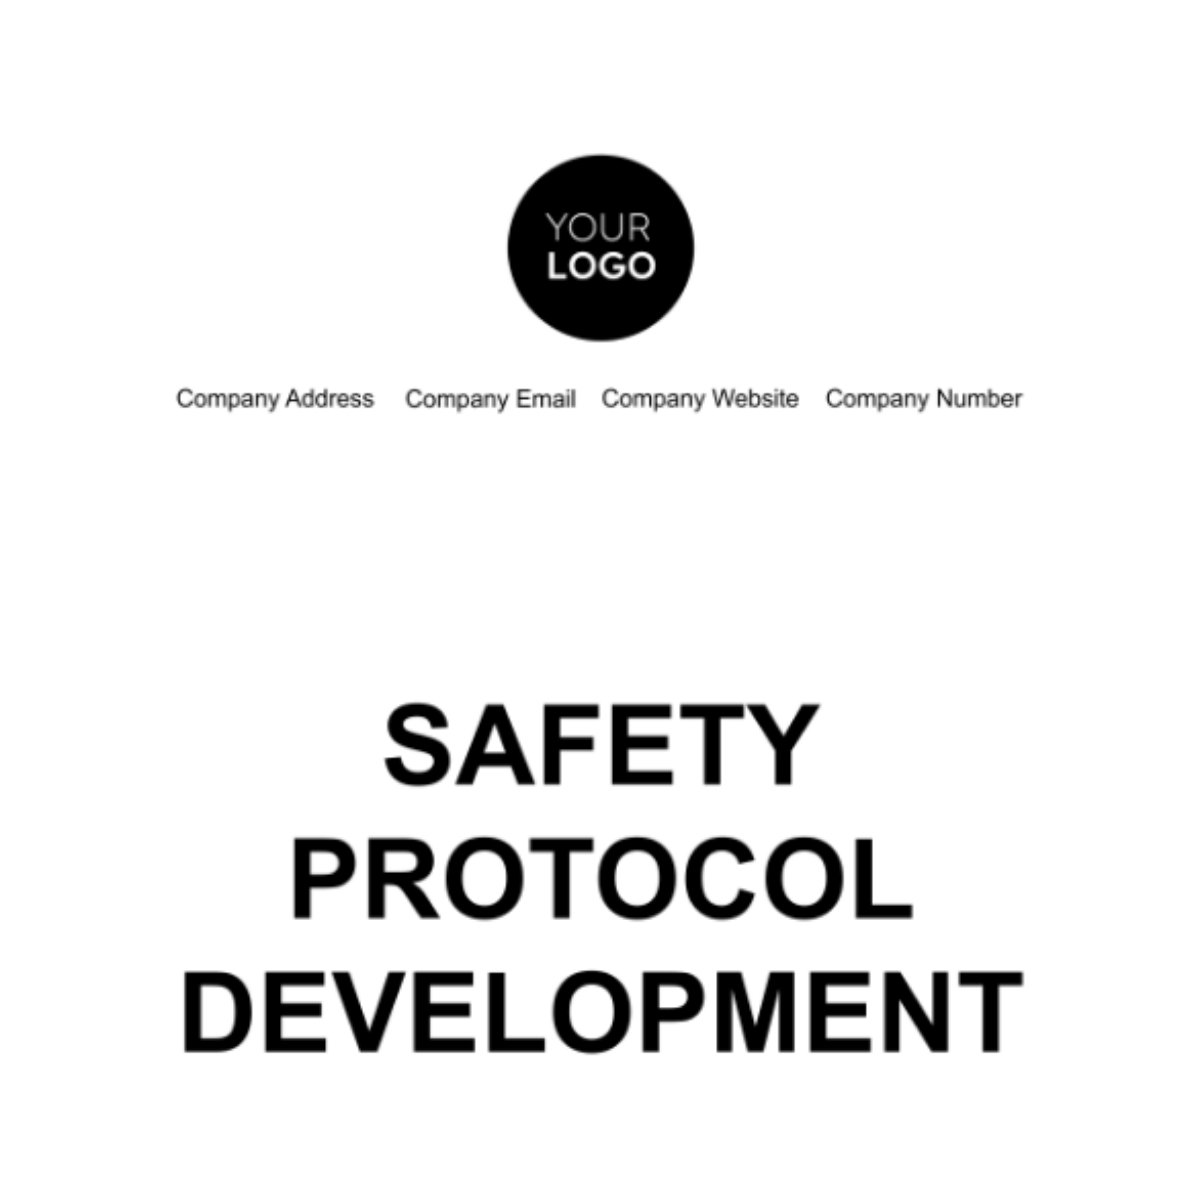 Free Safety Protocol Development Template